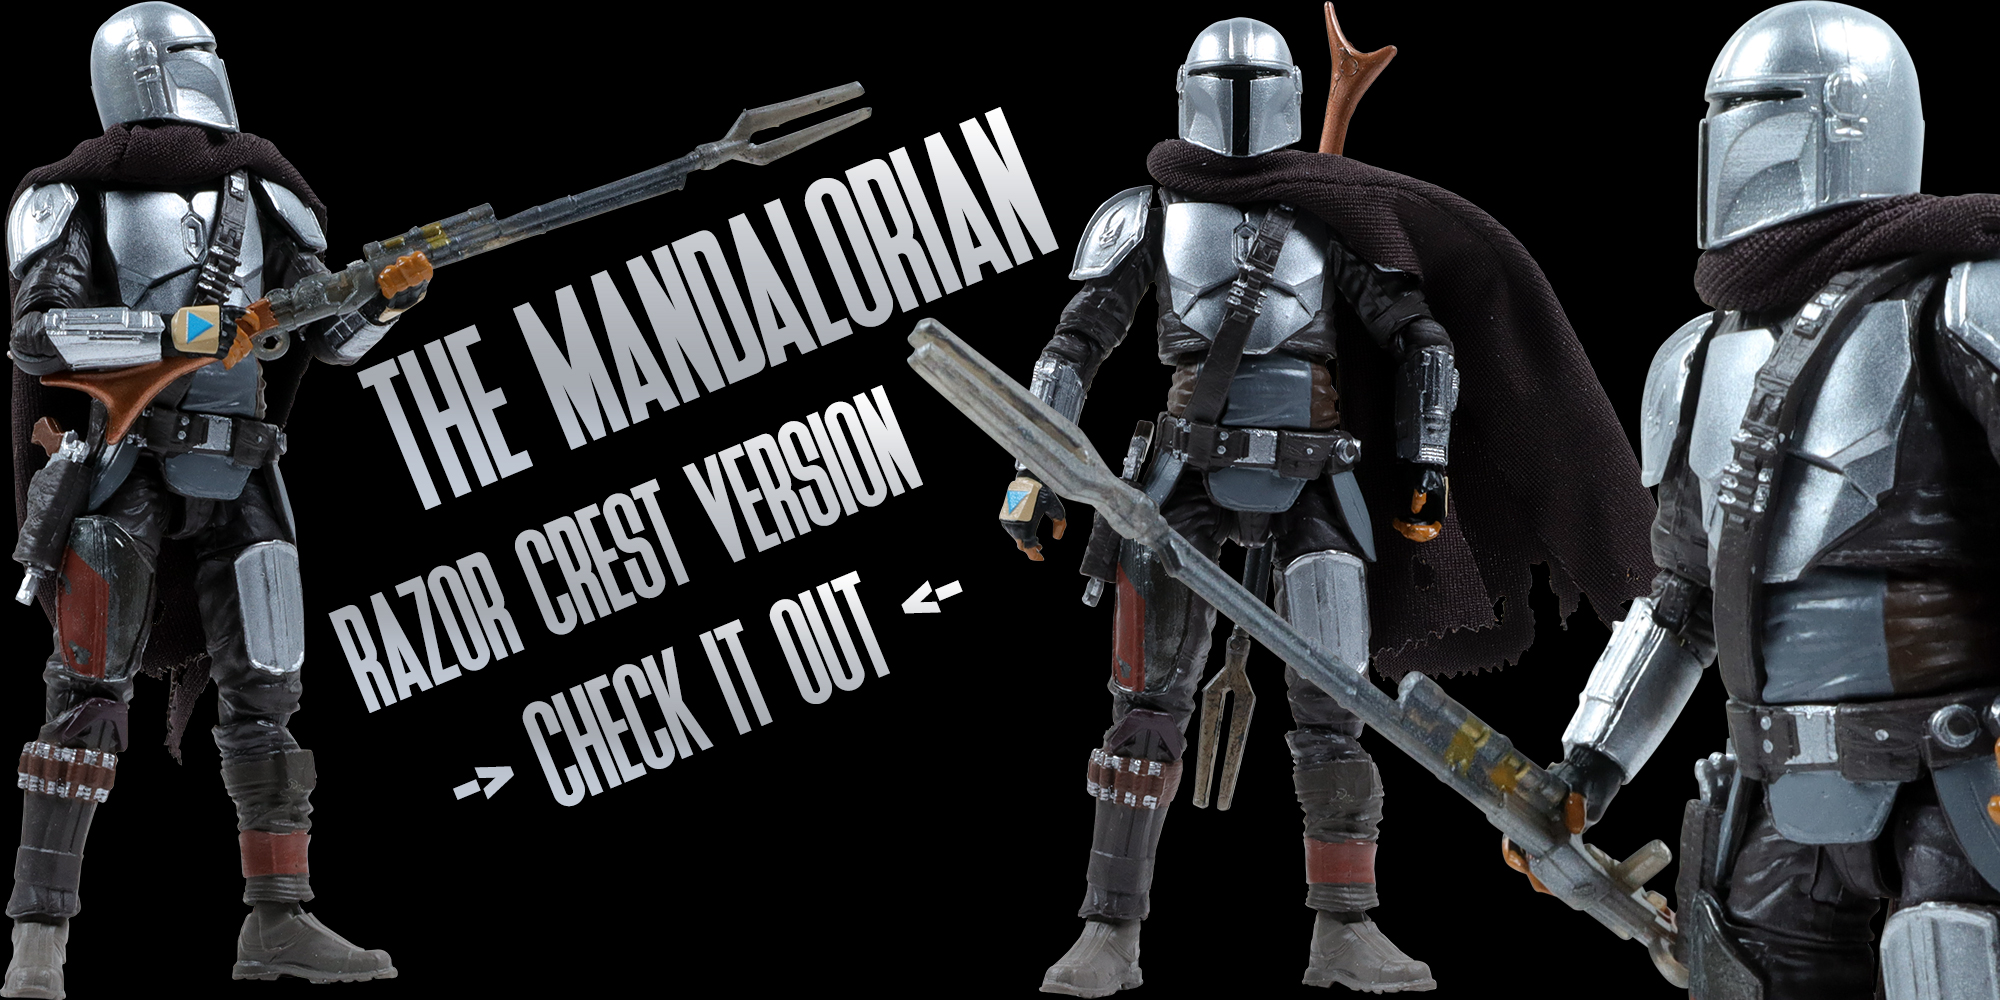 The Vintage Collection Mandalorian (Razor Crest Version) Added